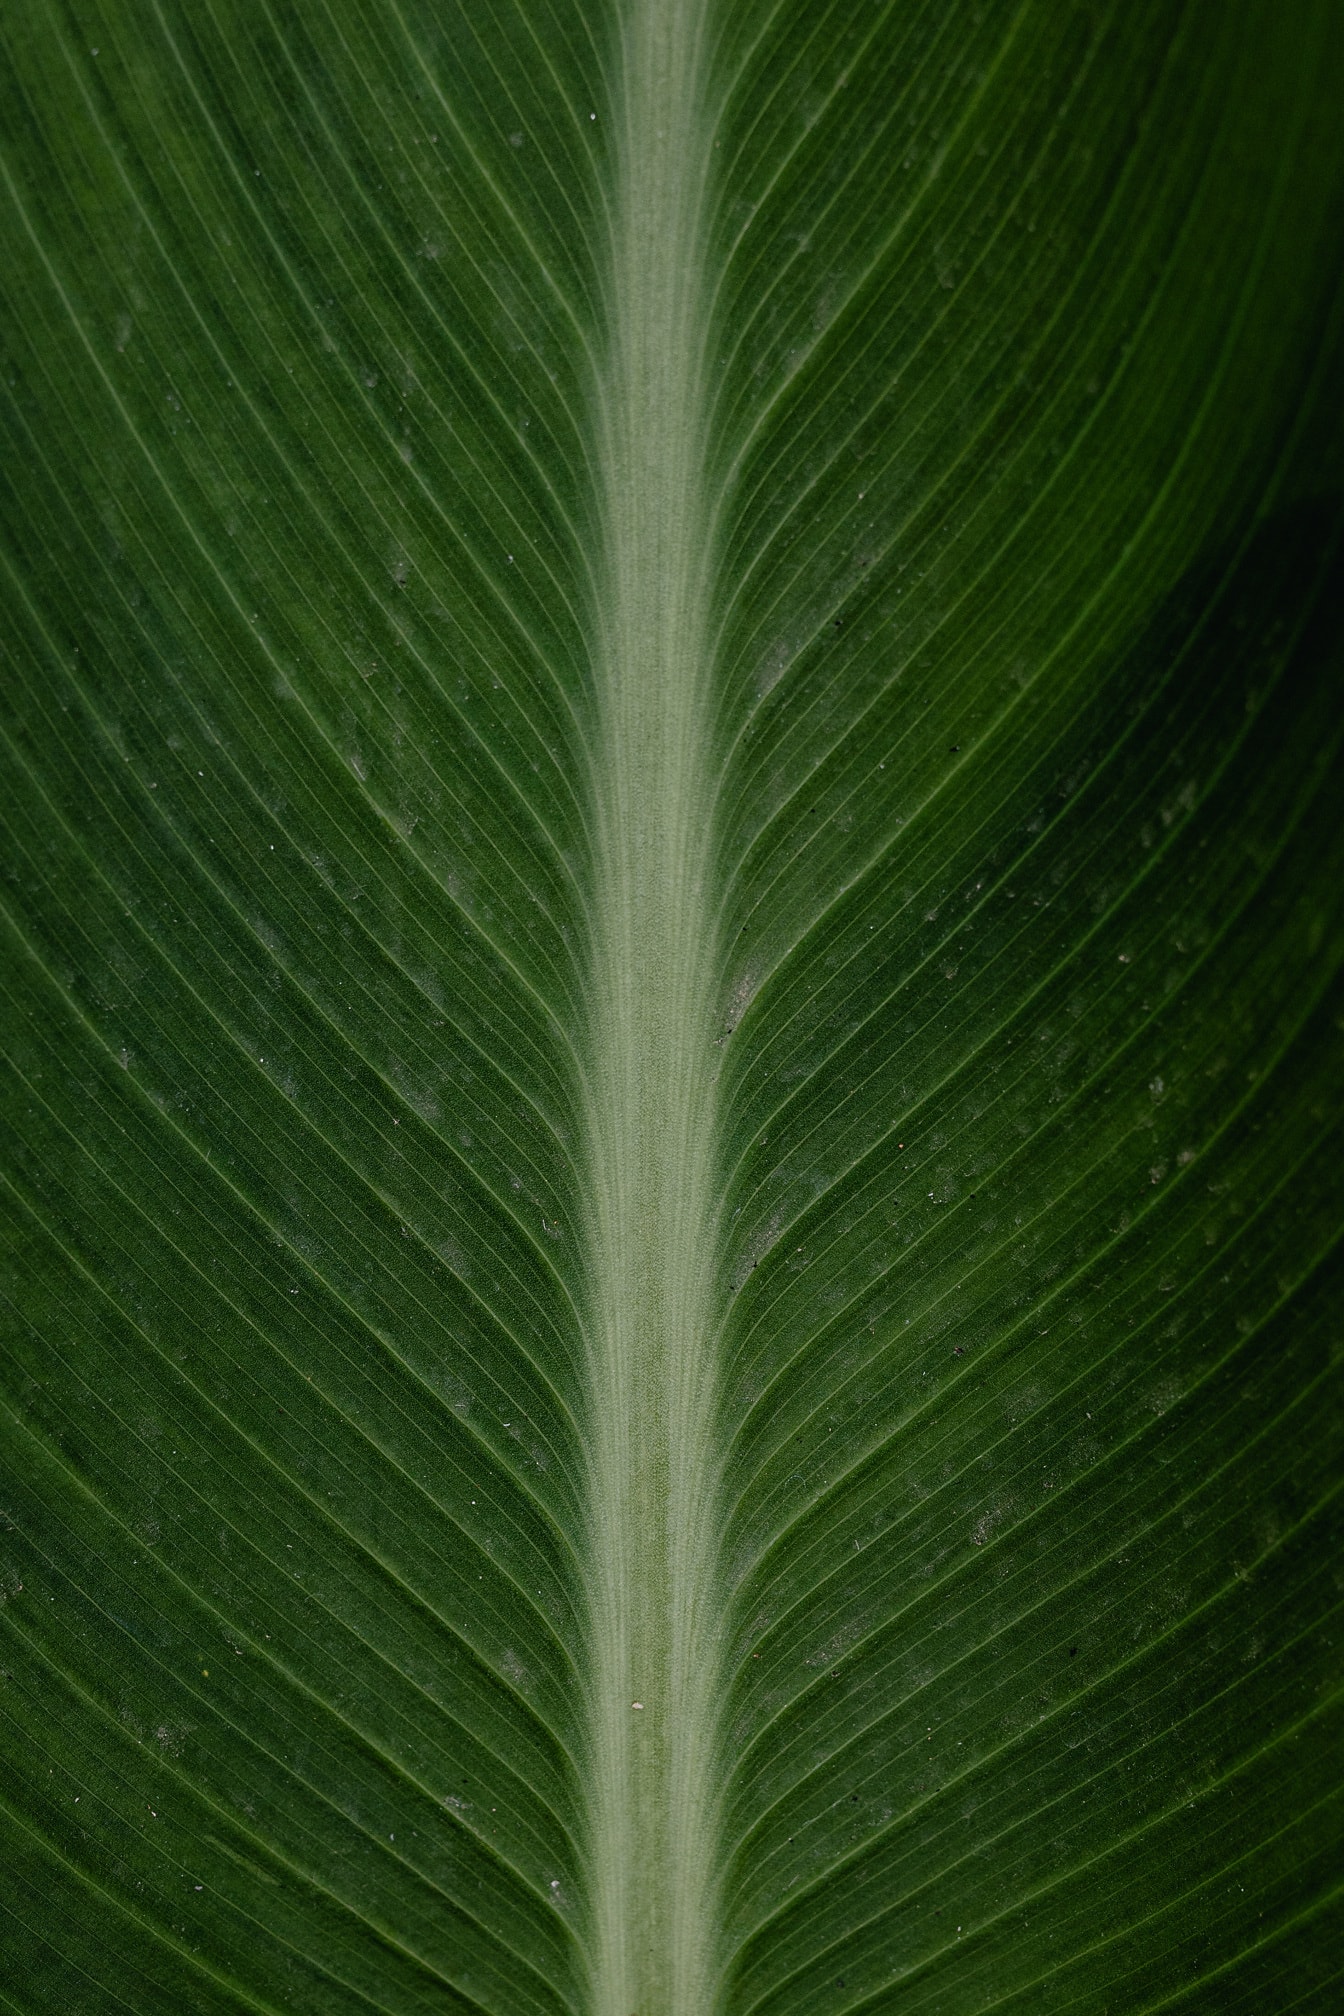 Tampilan close-up daun palem hijau tua yang besar